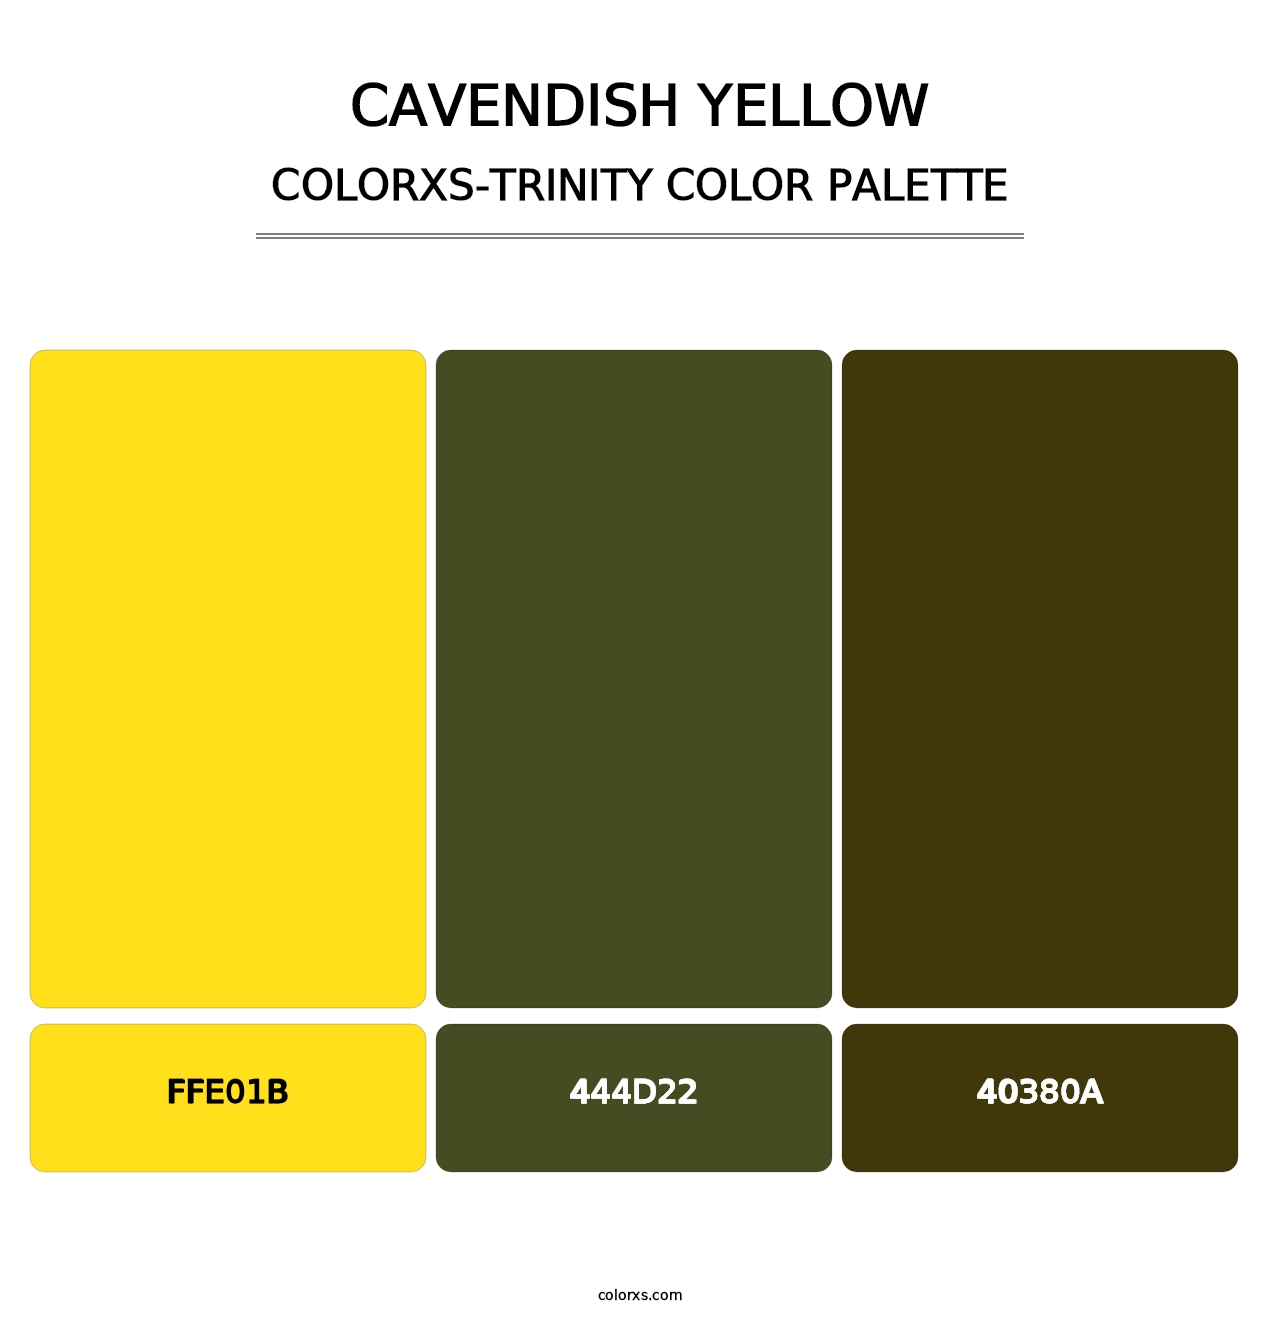 Cavendish Yellow - Colorxs Trinity Palette